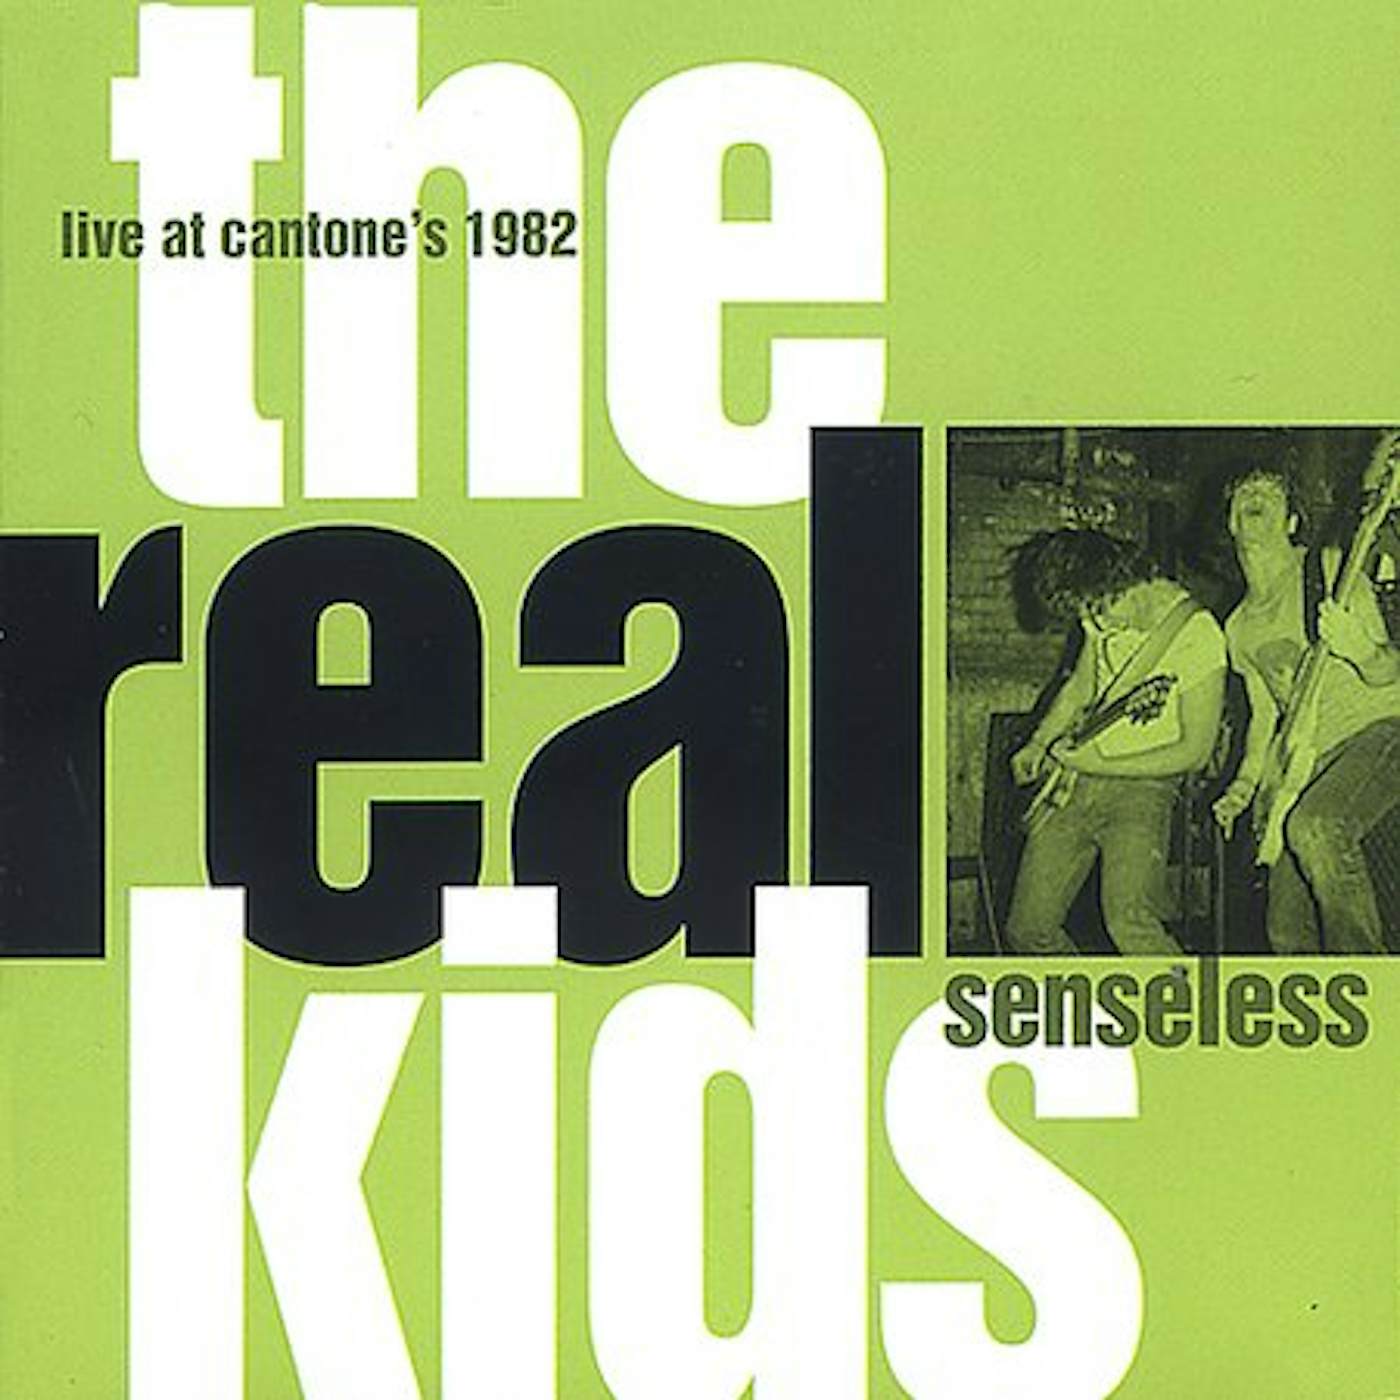 The Real Kids SENSELESS CD